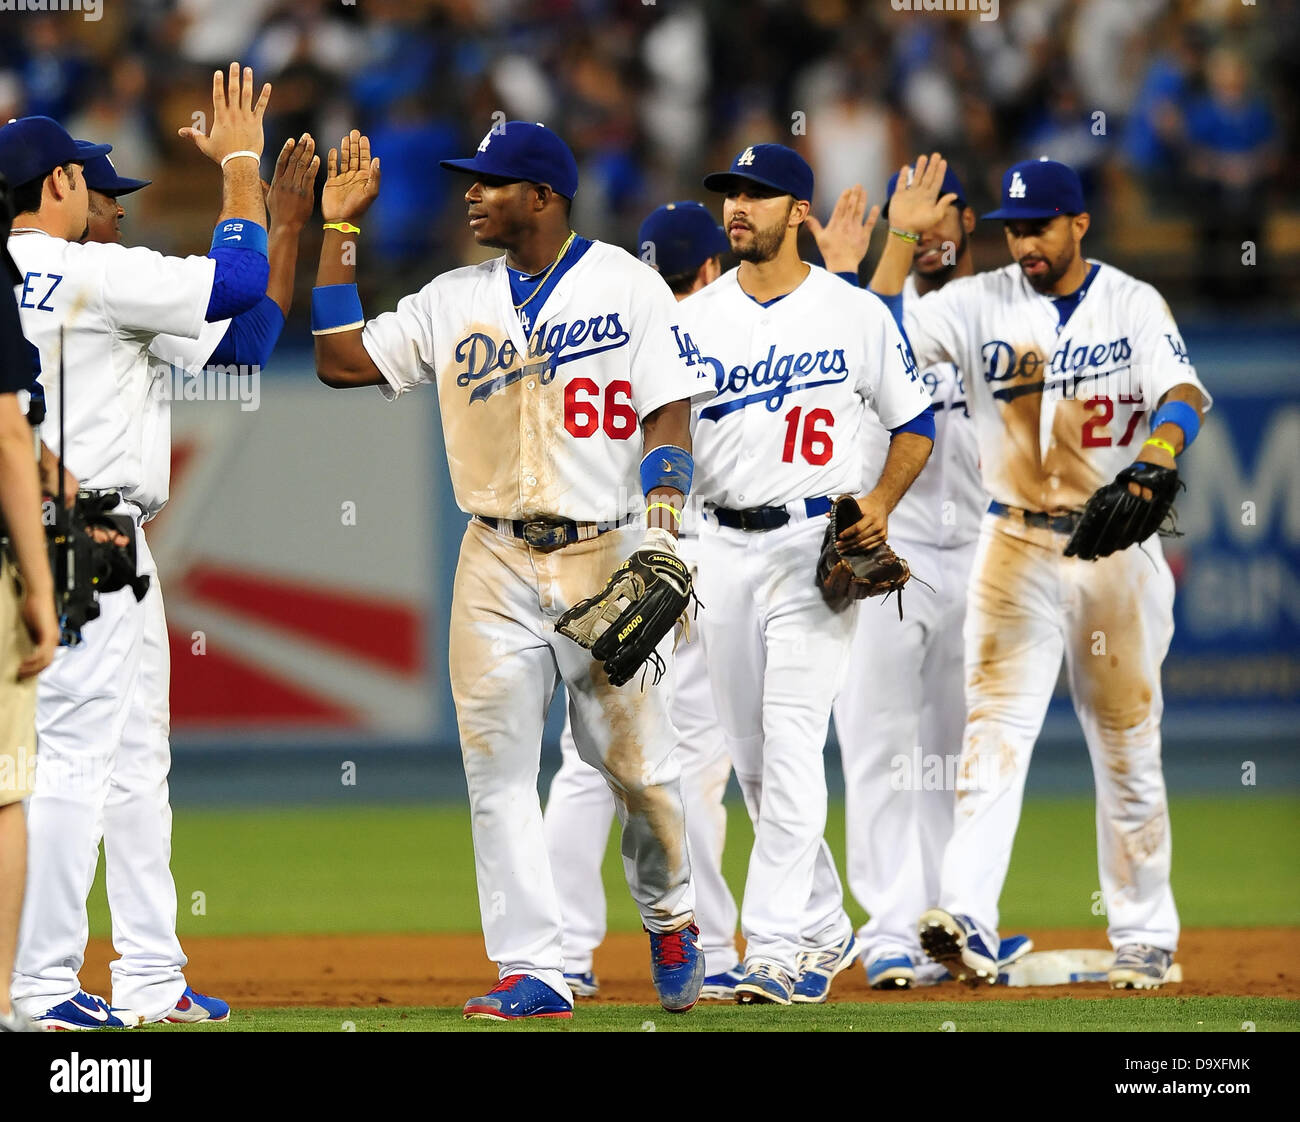 LOS ANGELES, CA - OCTOBER 12: Los Angeles Dodgers right fielder